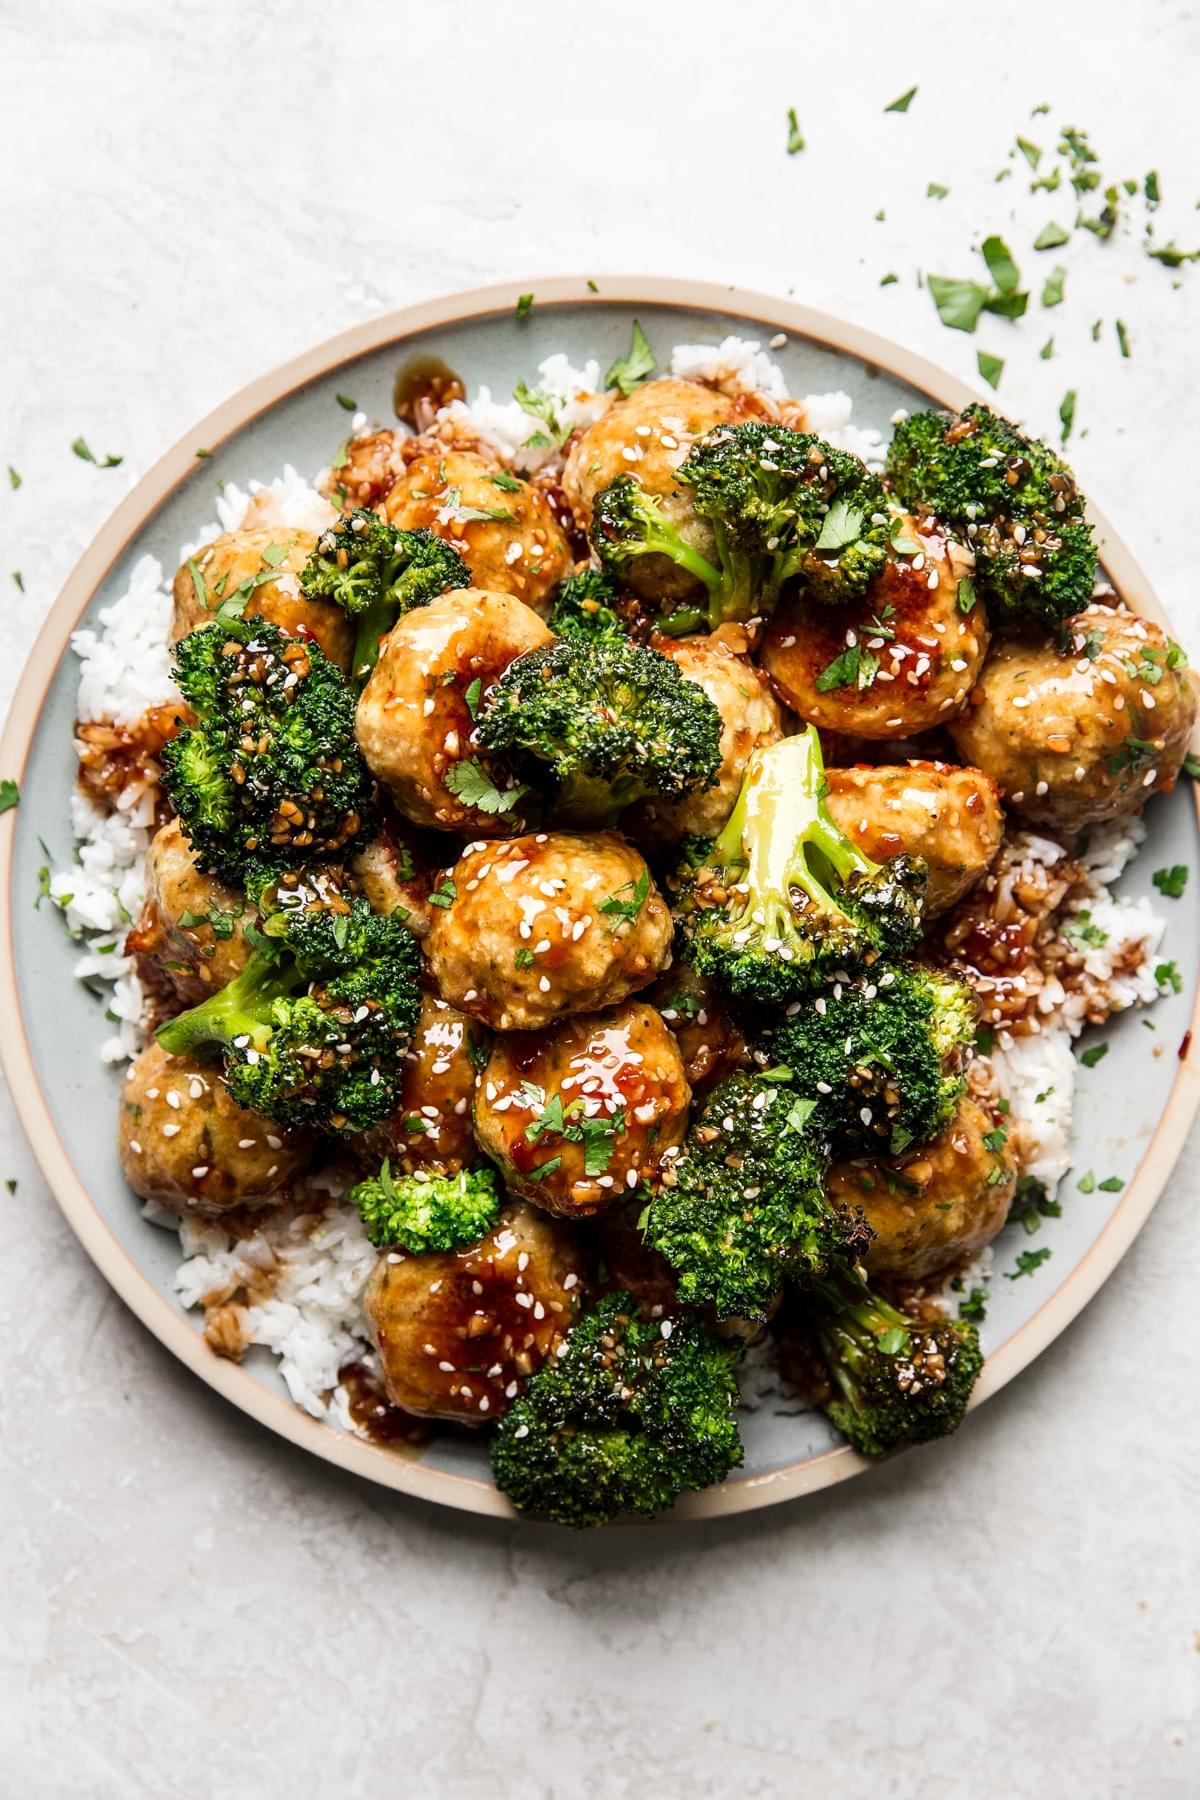 Freezer Teriyaki Chicken Meatballs with broccoli and rice